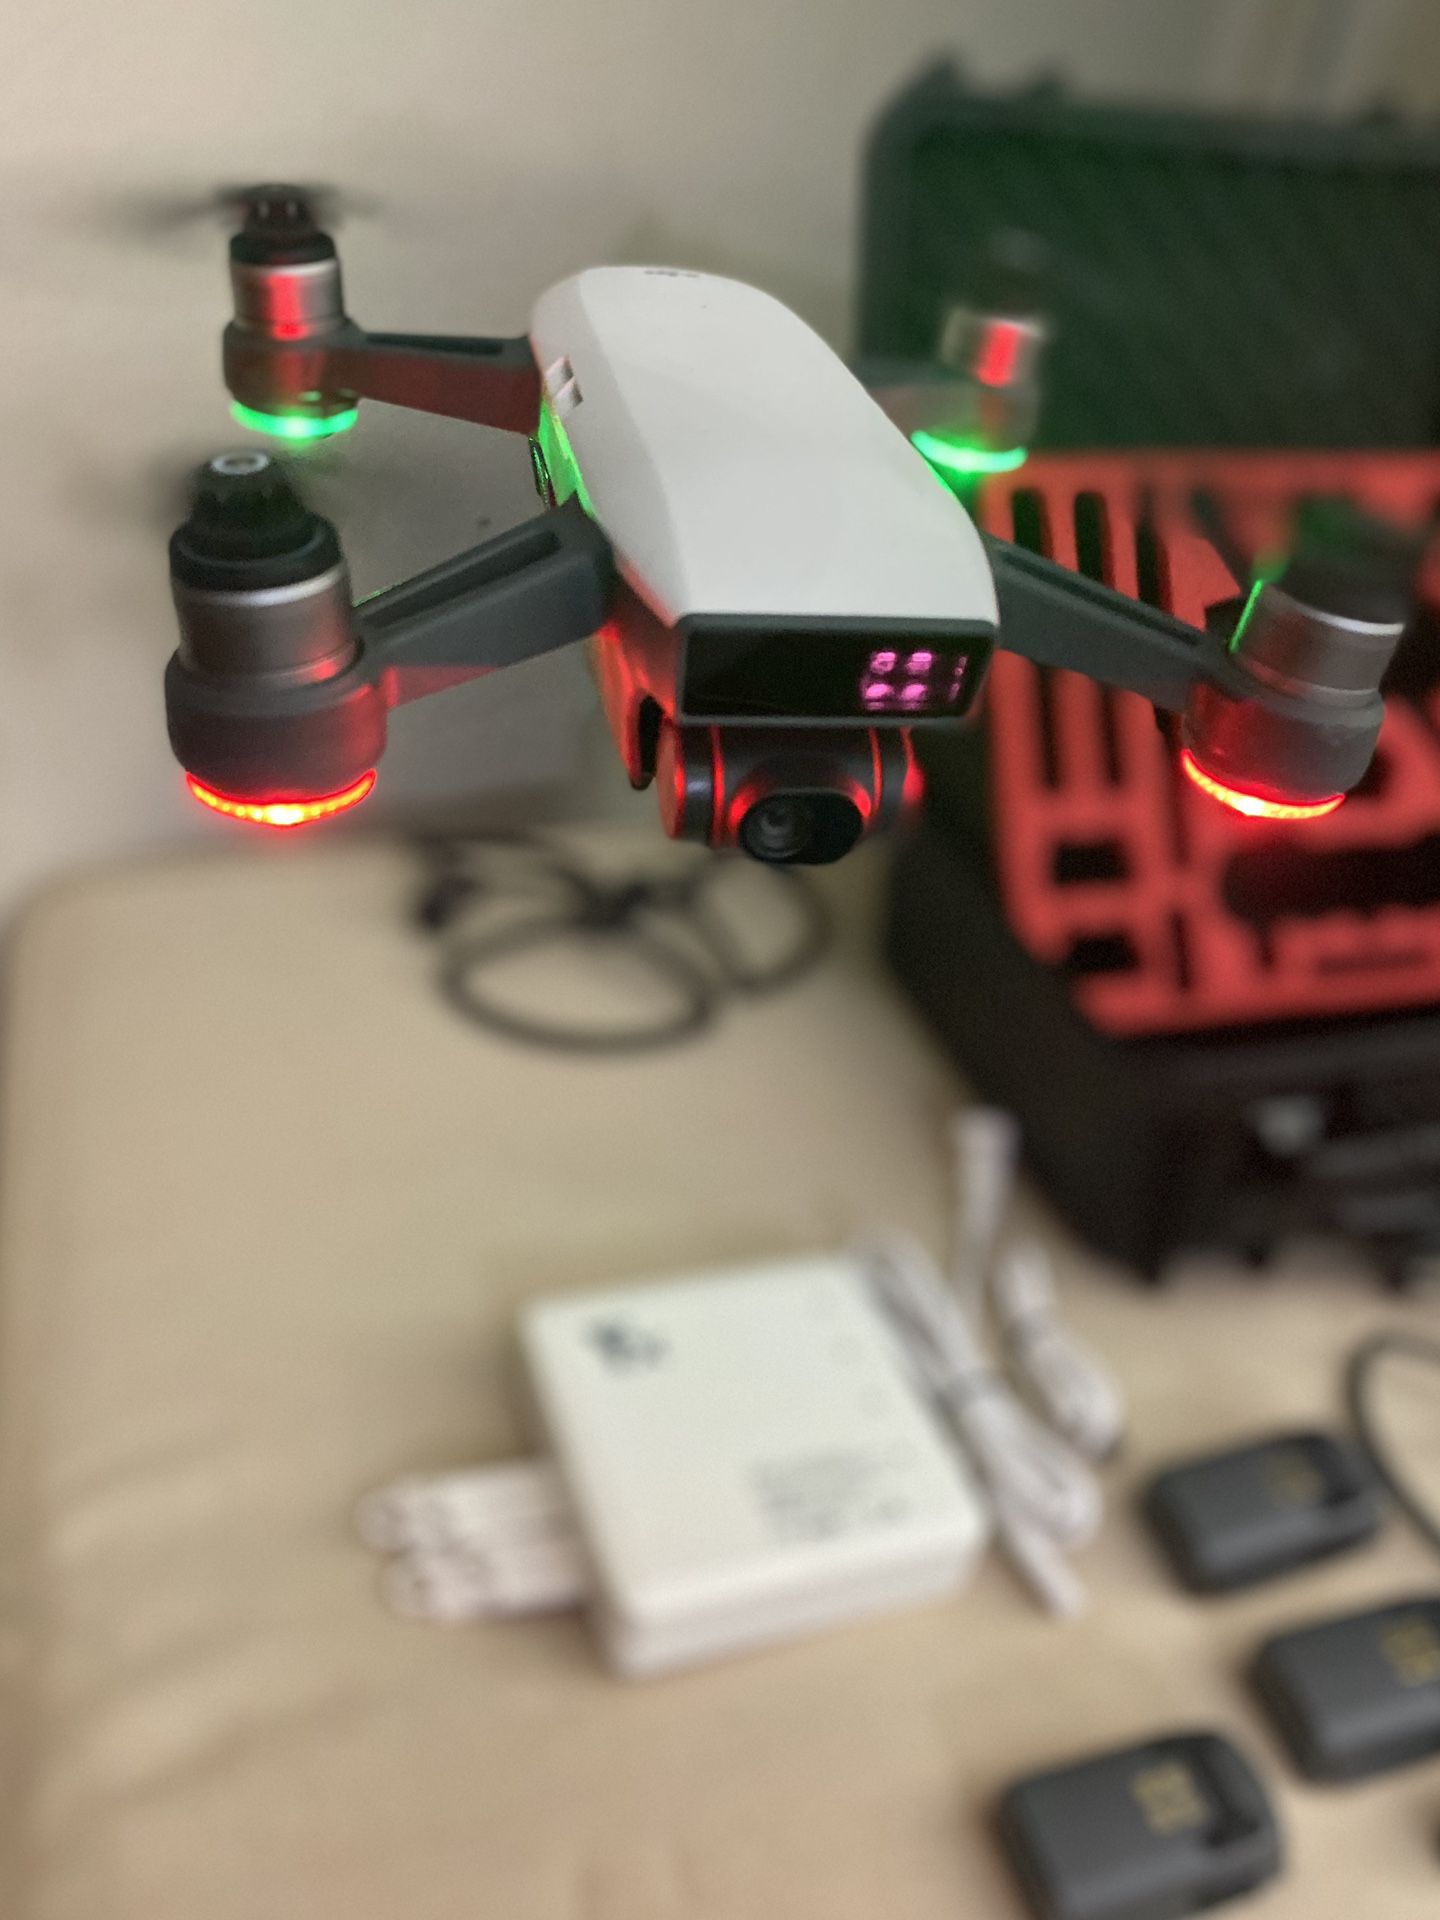 DJI Spark Drone (modded)